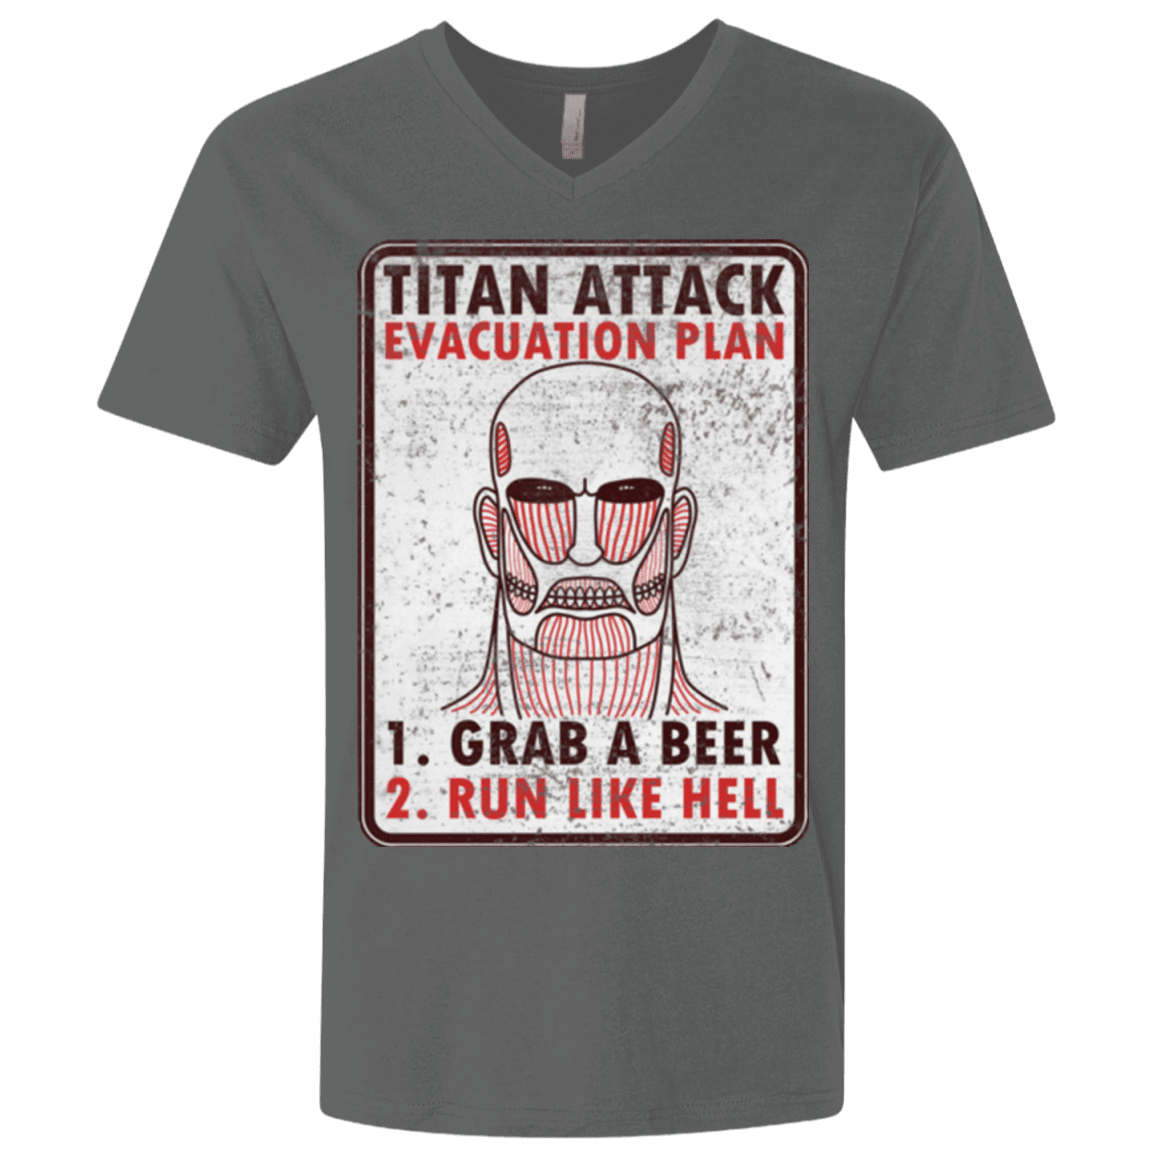 T-Shirts Heavy Metal / X-Small Titan plan Men's Premium V-Neck